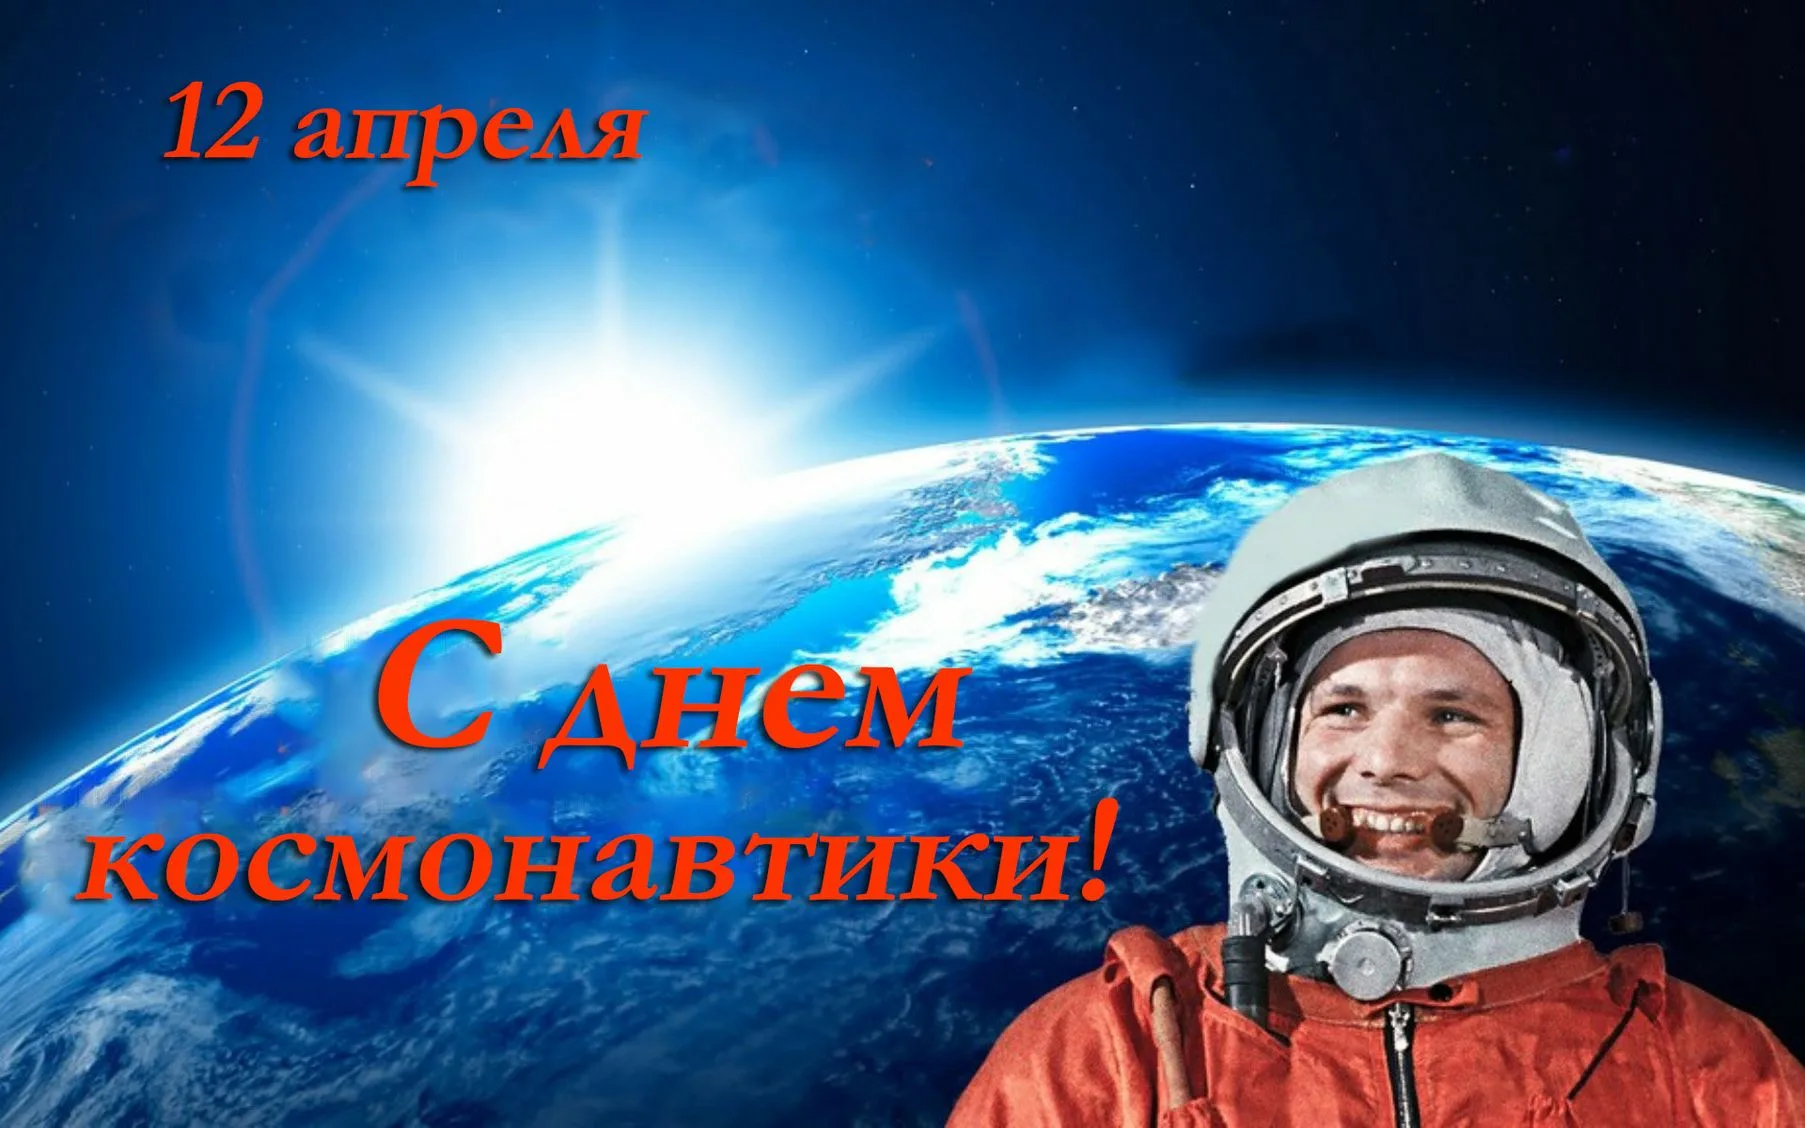 13 апреля день космонавтики. 12 Апреля день космонавтики. День Космонавта. 12 - Апрель день косонавтики. День космонавтики картинки.